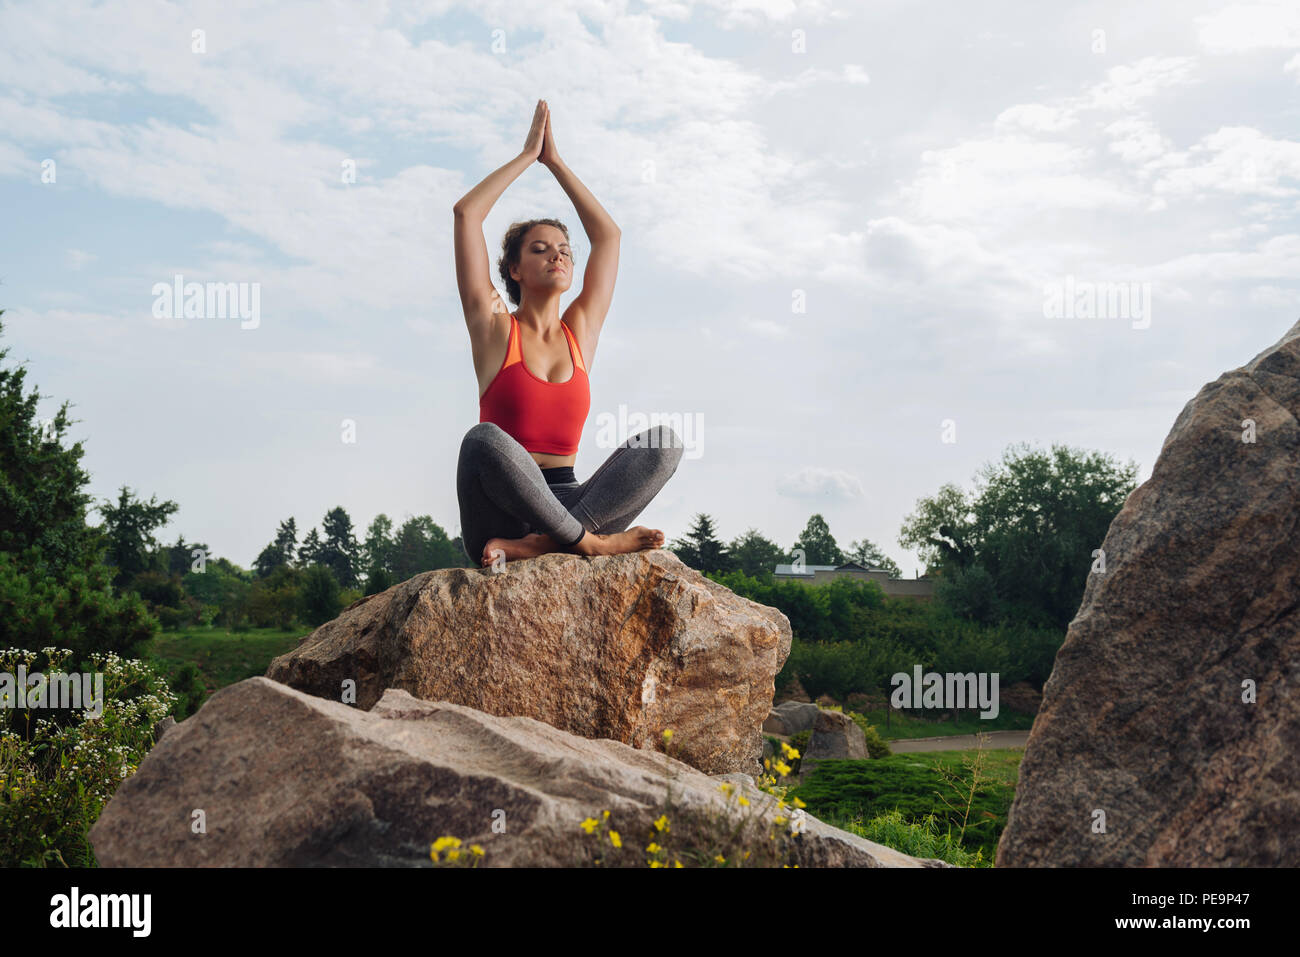 Yoga woman breathing slowly while practicing sitting posture Stock Photo